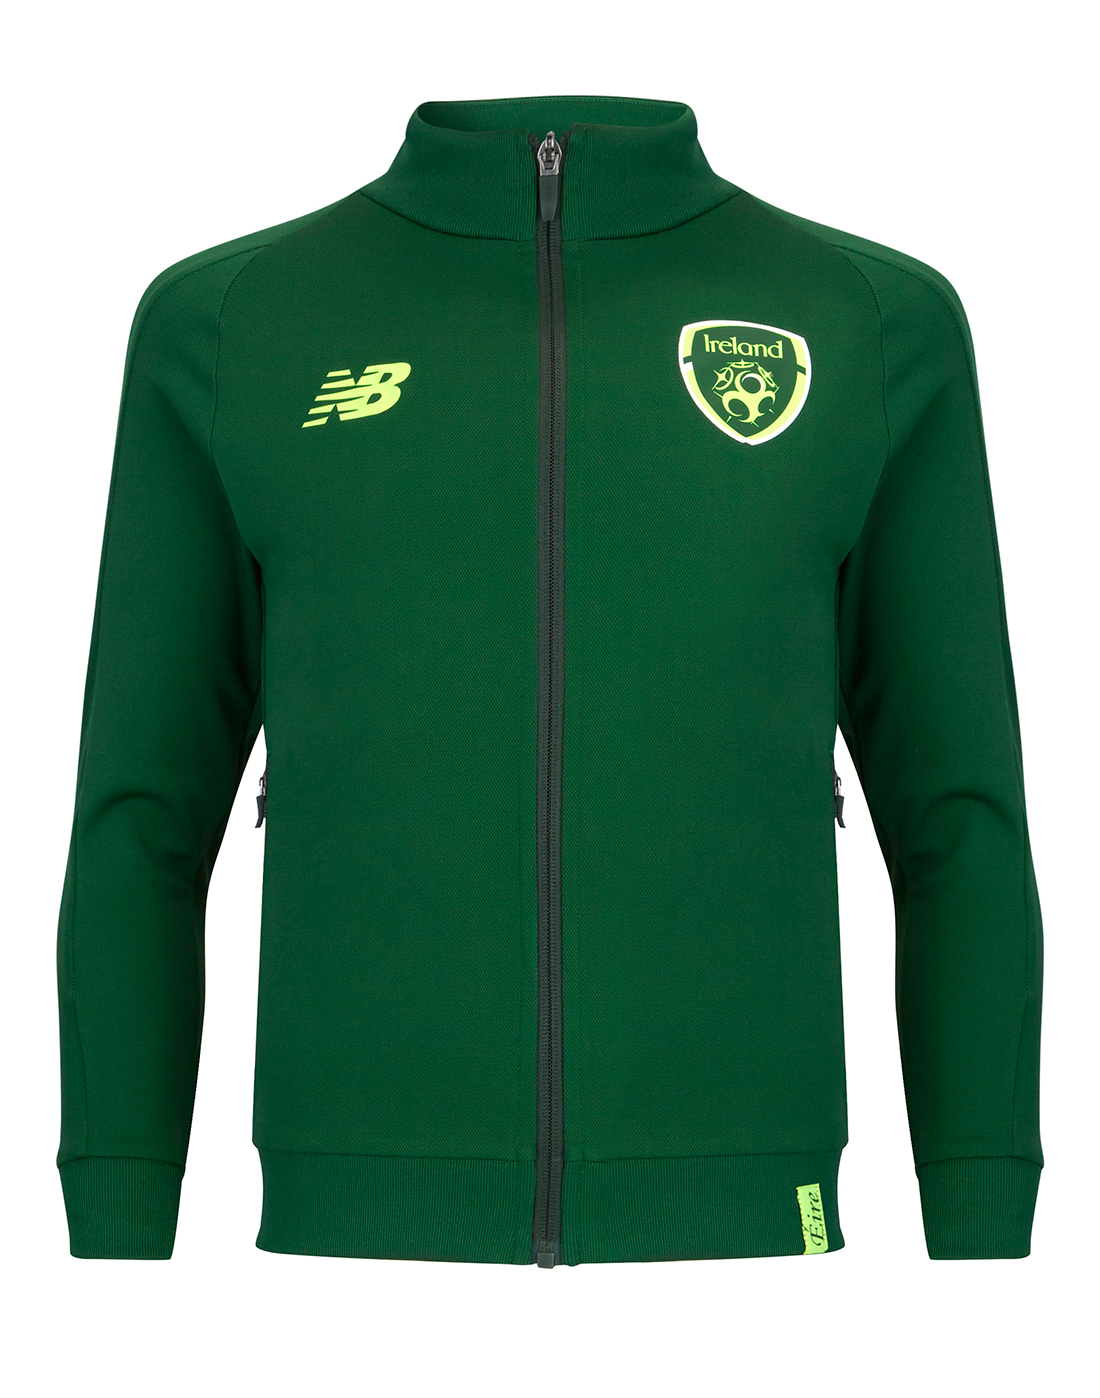 Kids Ireland Full Zip Presentation Jacket | Green | Life Style Sports